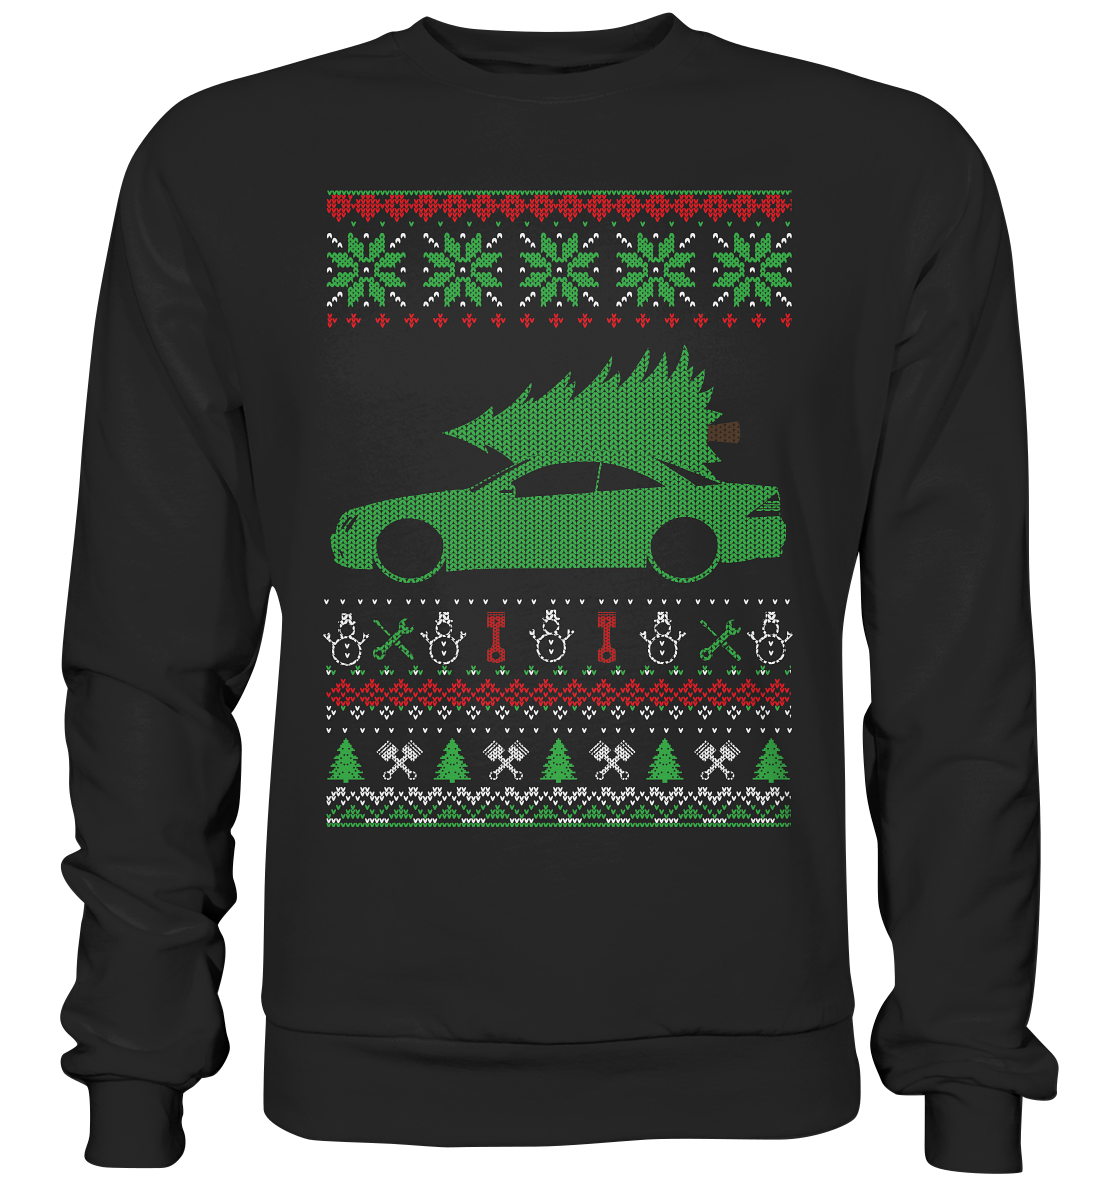 CODUGLY_MGKC215 - Premium Sweatshirt